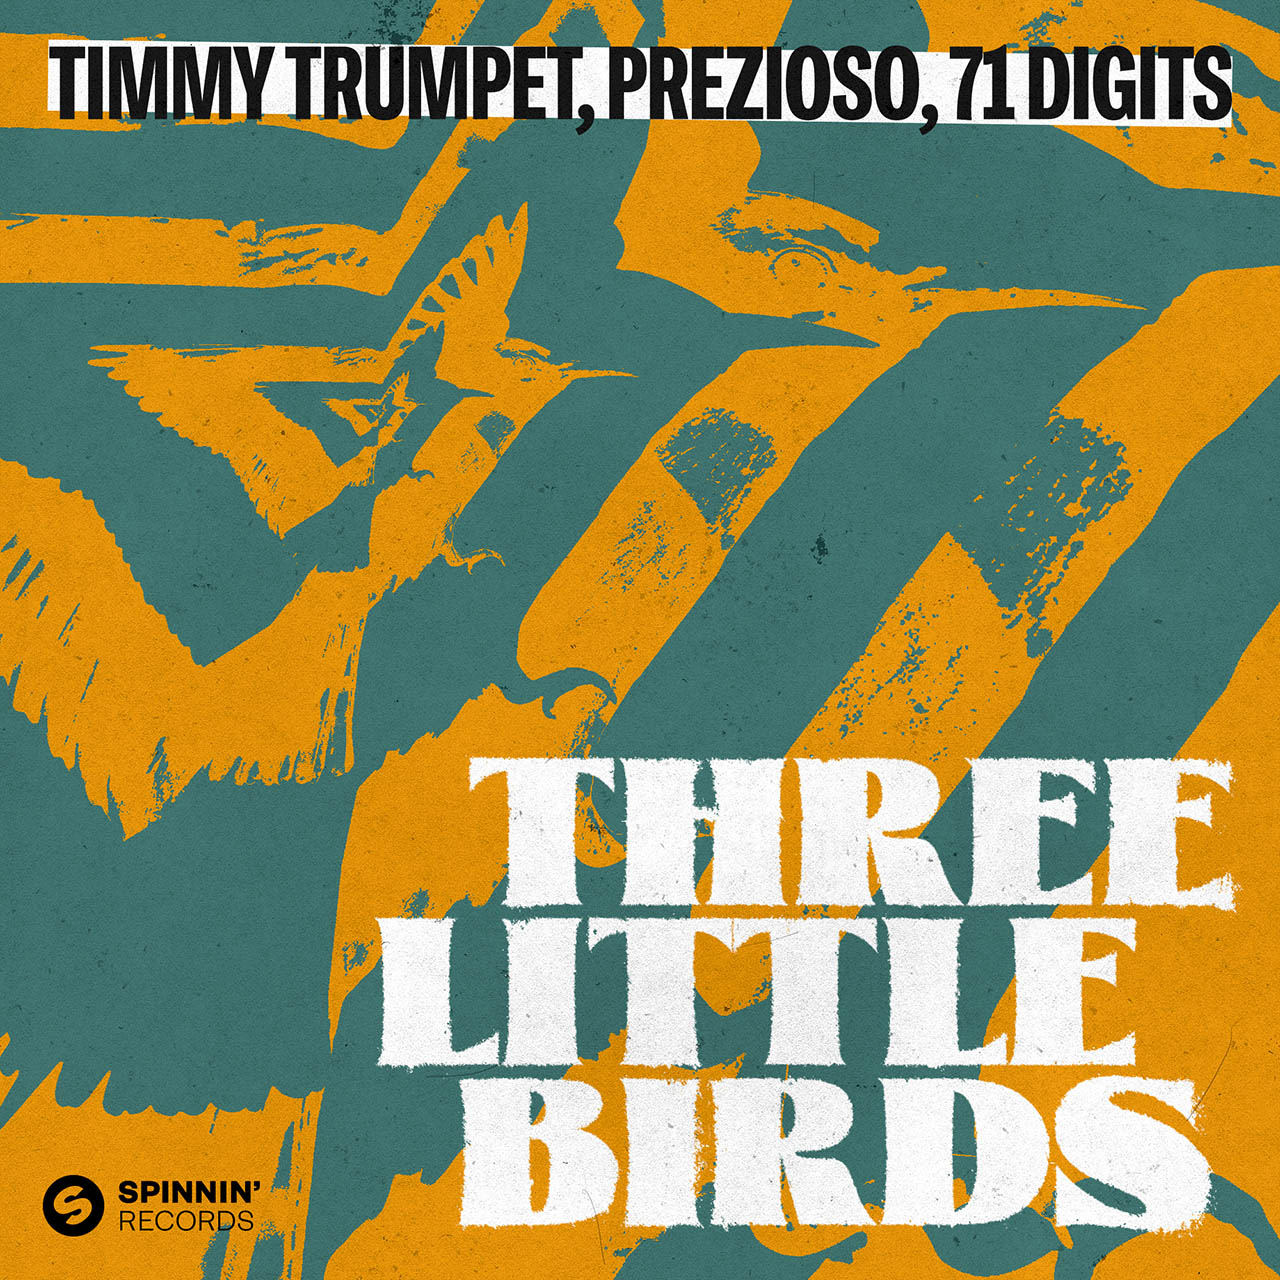 Timmy Trumpet - Bob Marley - Three Little Birds Remix